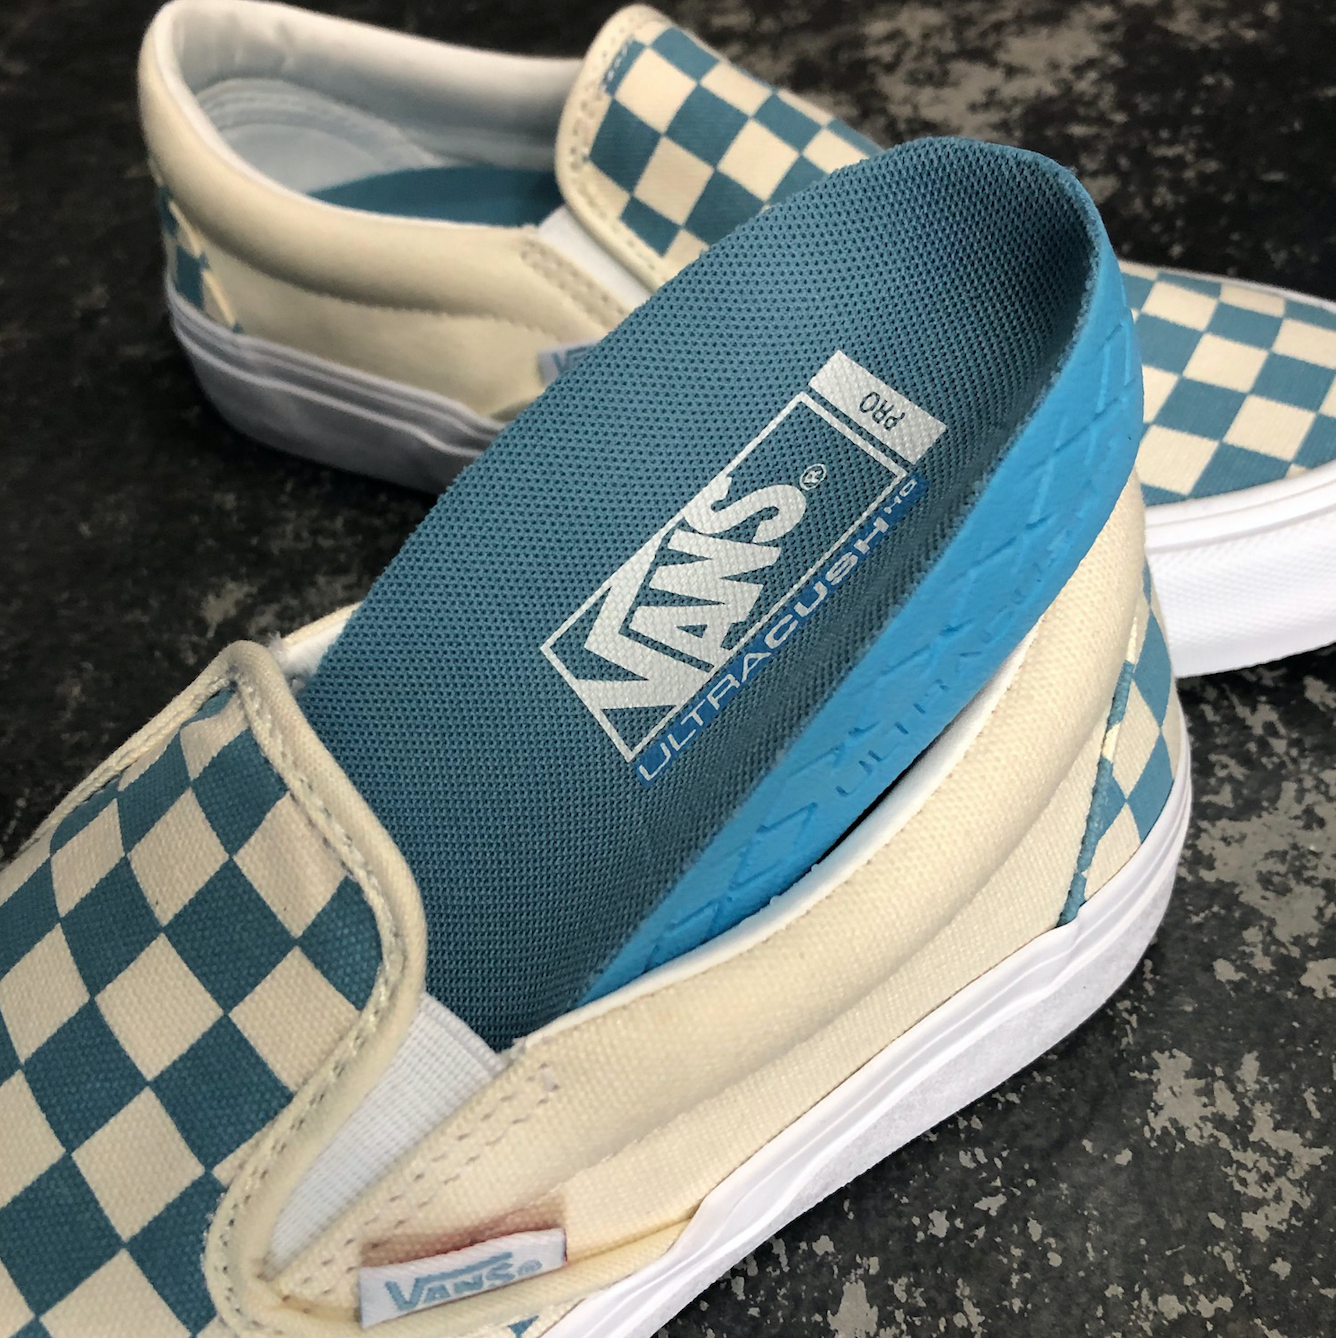 vans slip on checkerboard blue